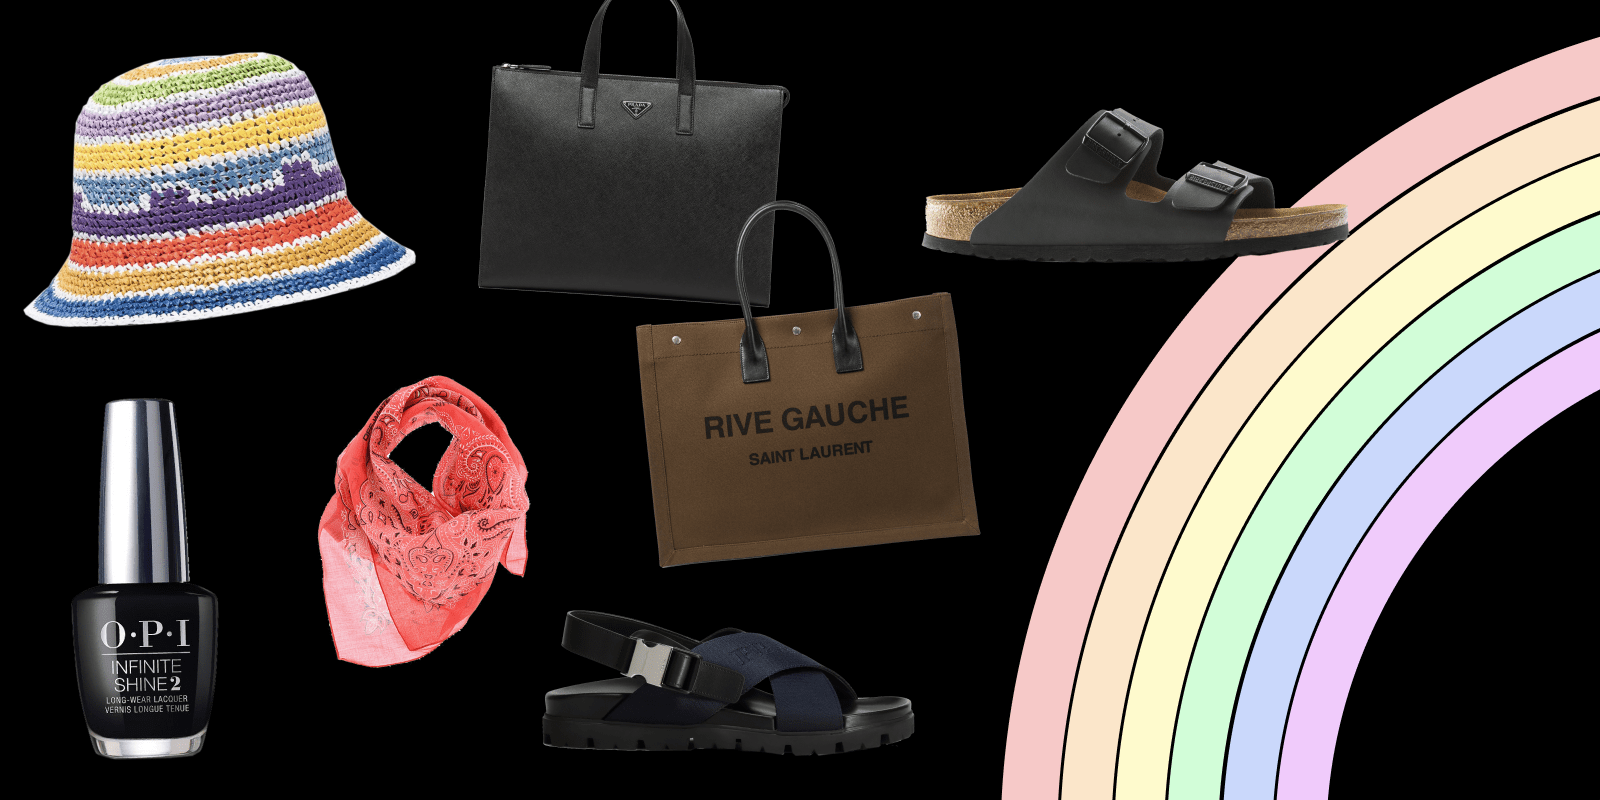 The Best Tote Bags for Men Make Your Summer Infinitely Better